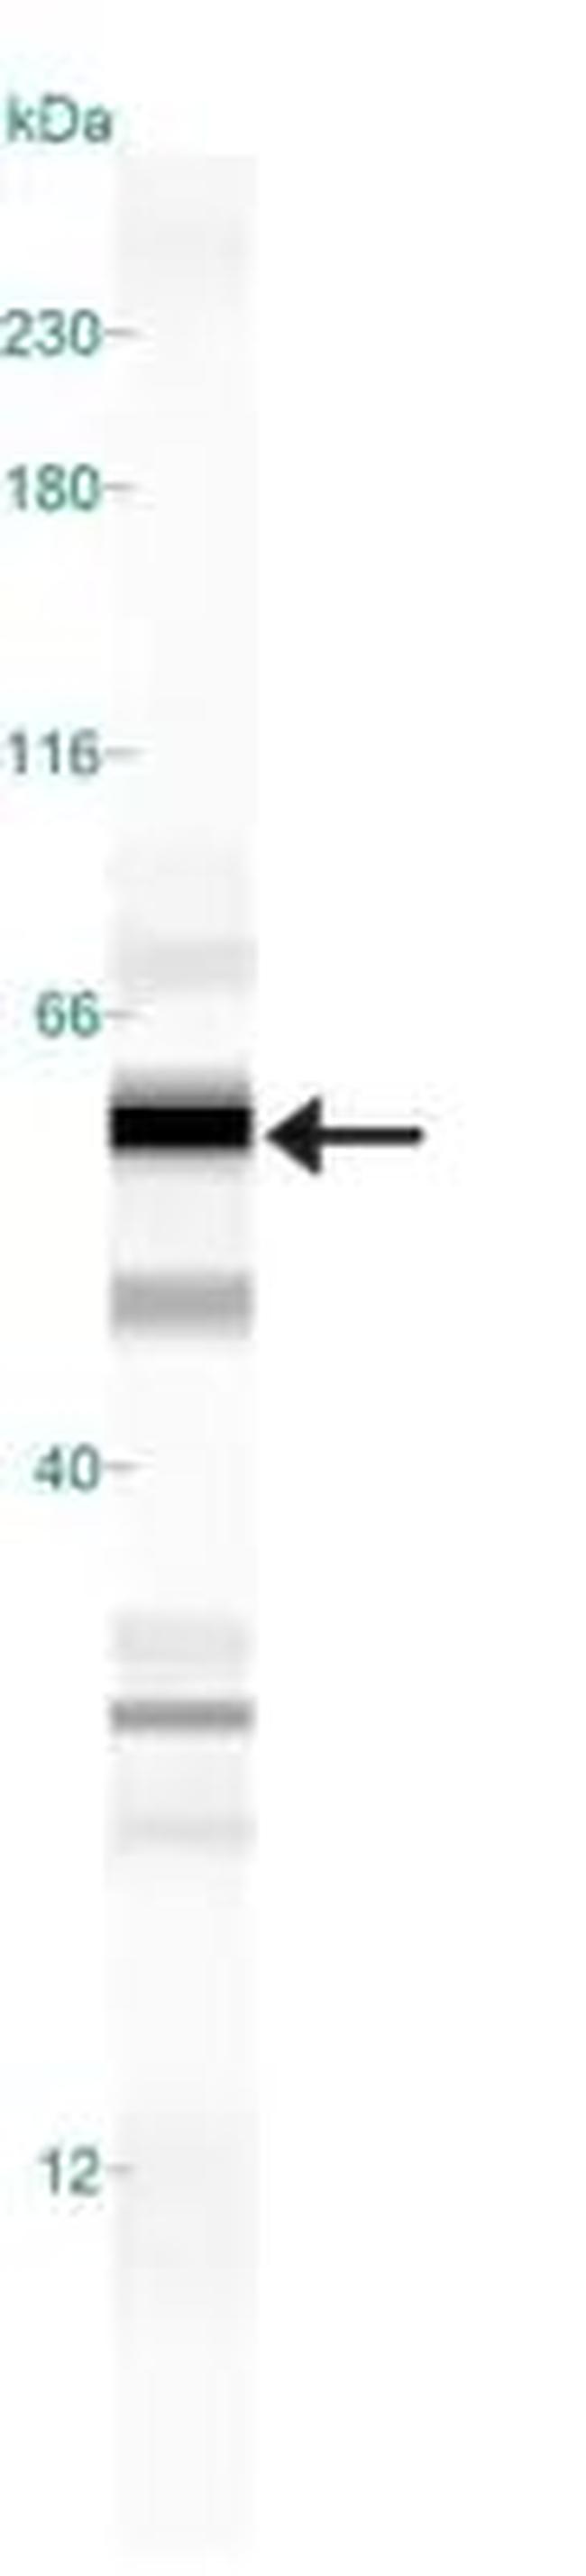 ATP13A2 Antibody in Western Blot (WB)